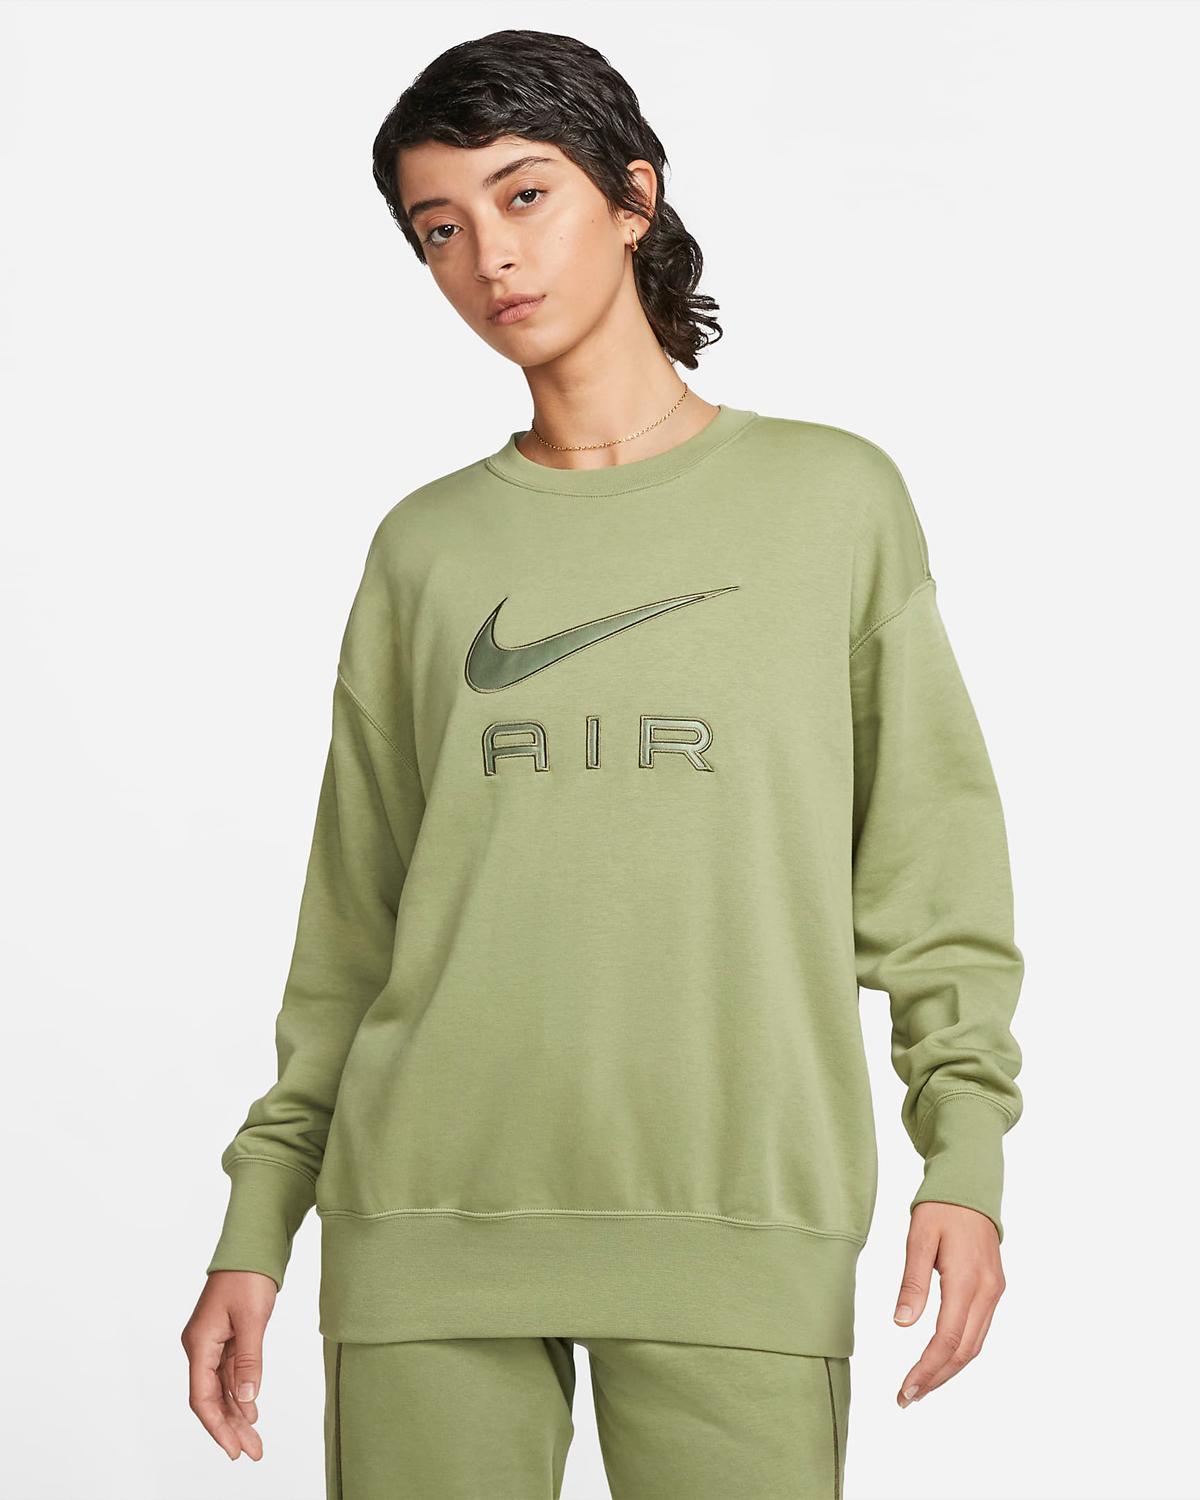 Nike-Air-Womens-Sweatshirt-Alligator-Green